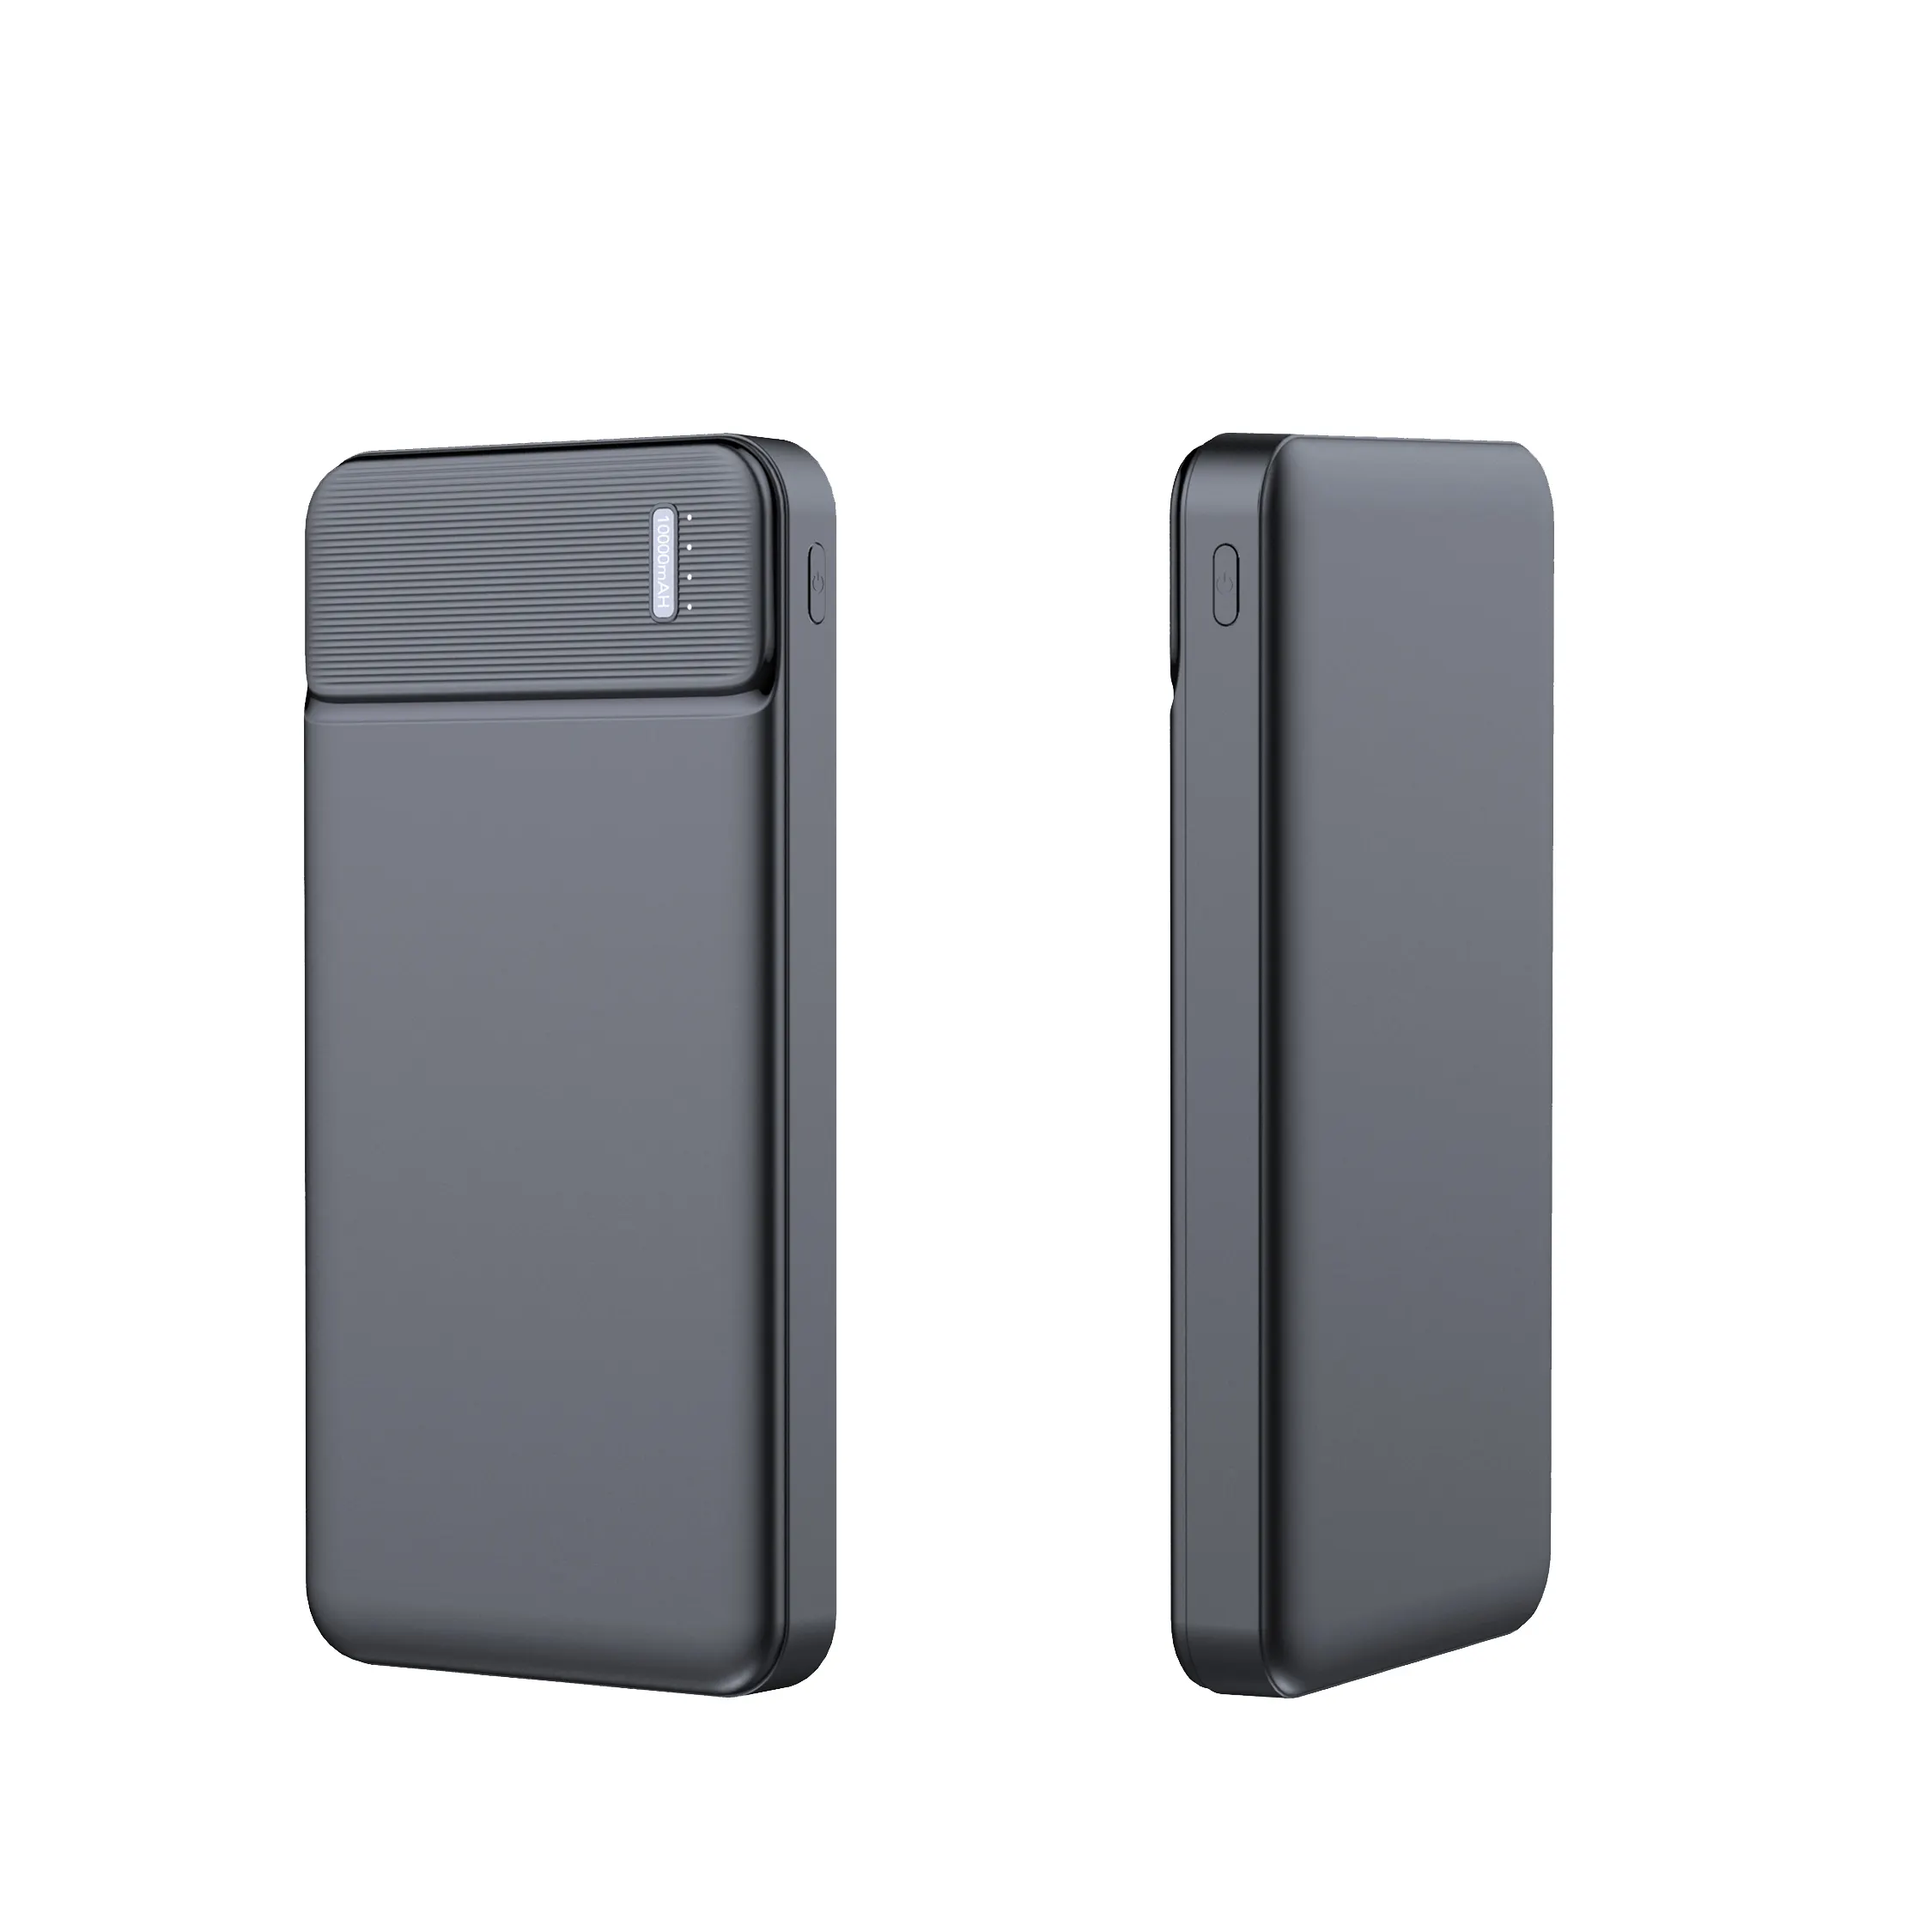 2023 Mini Power Bank 10000mah Dual Usb Portable Charger Ultra Slim Powerbanks For Mobile With 2 Usb Port